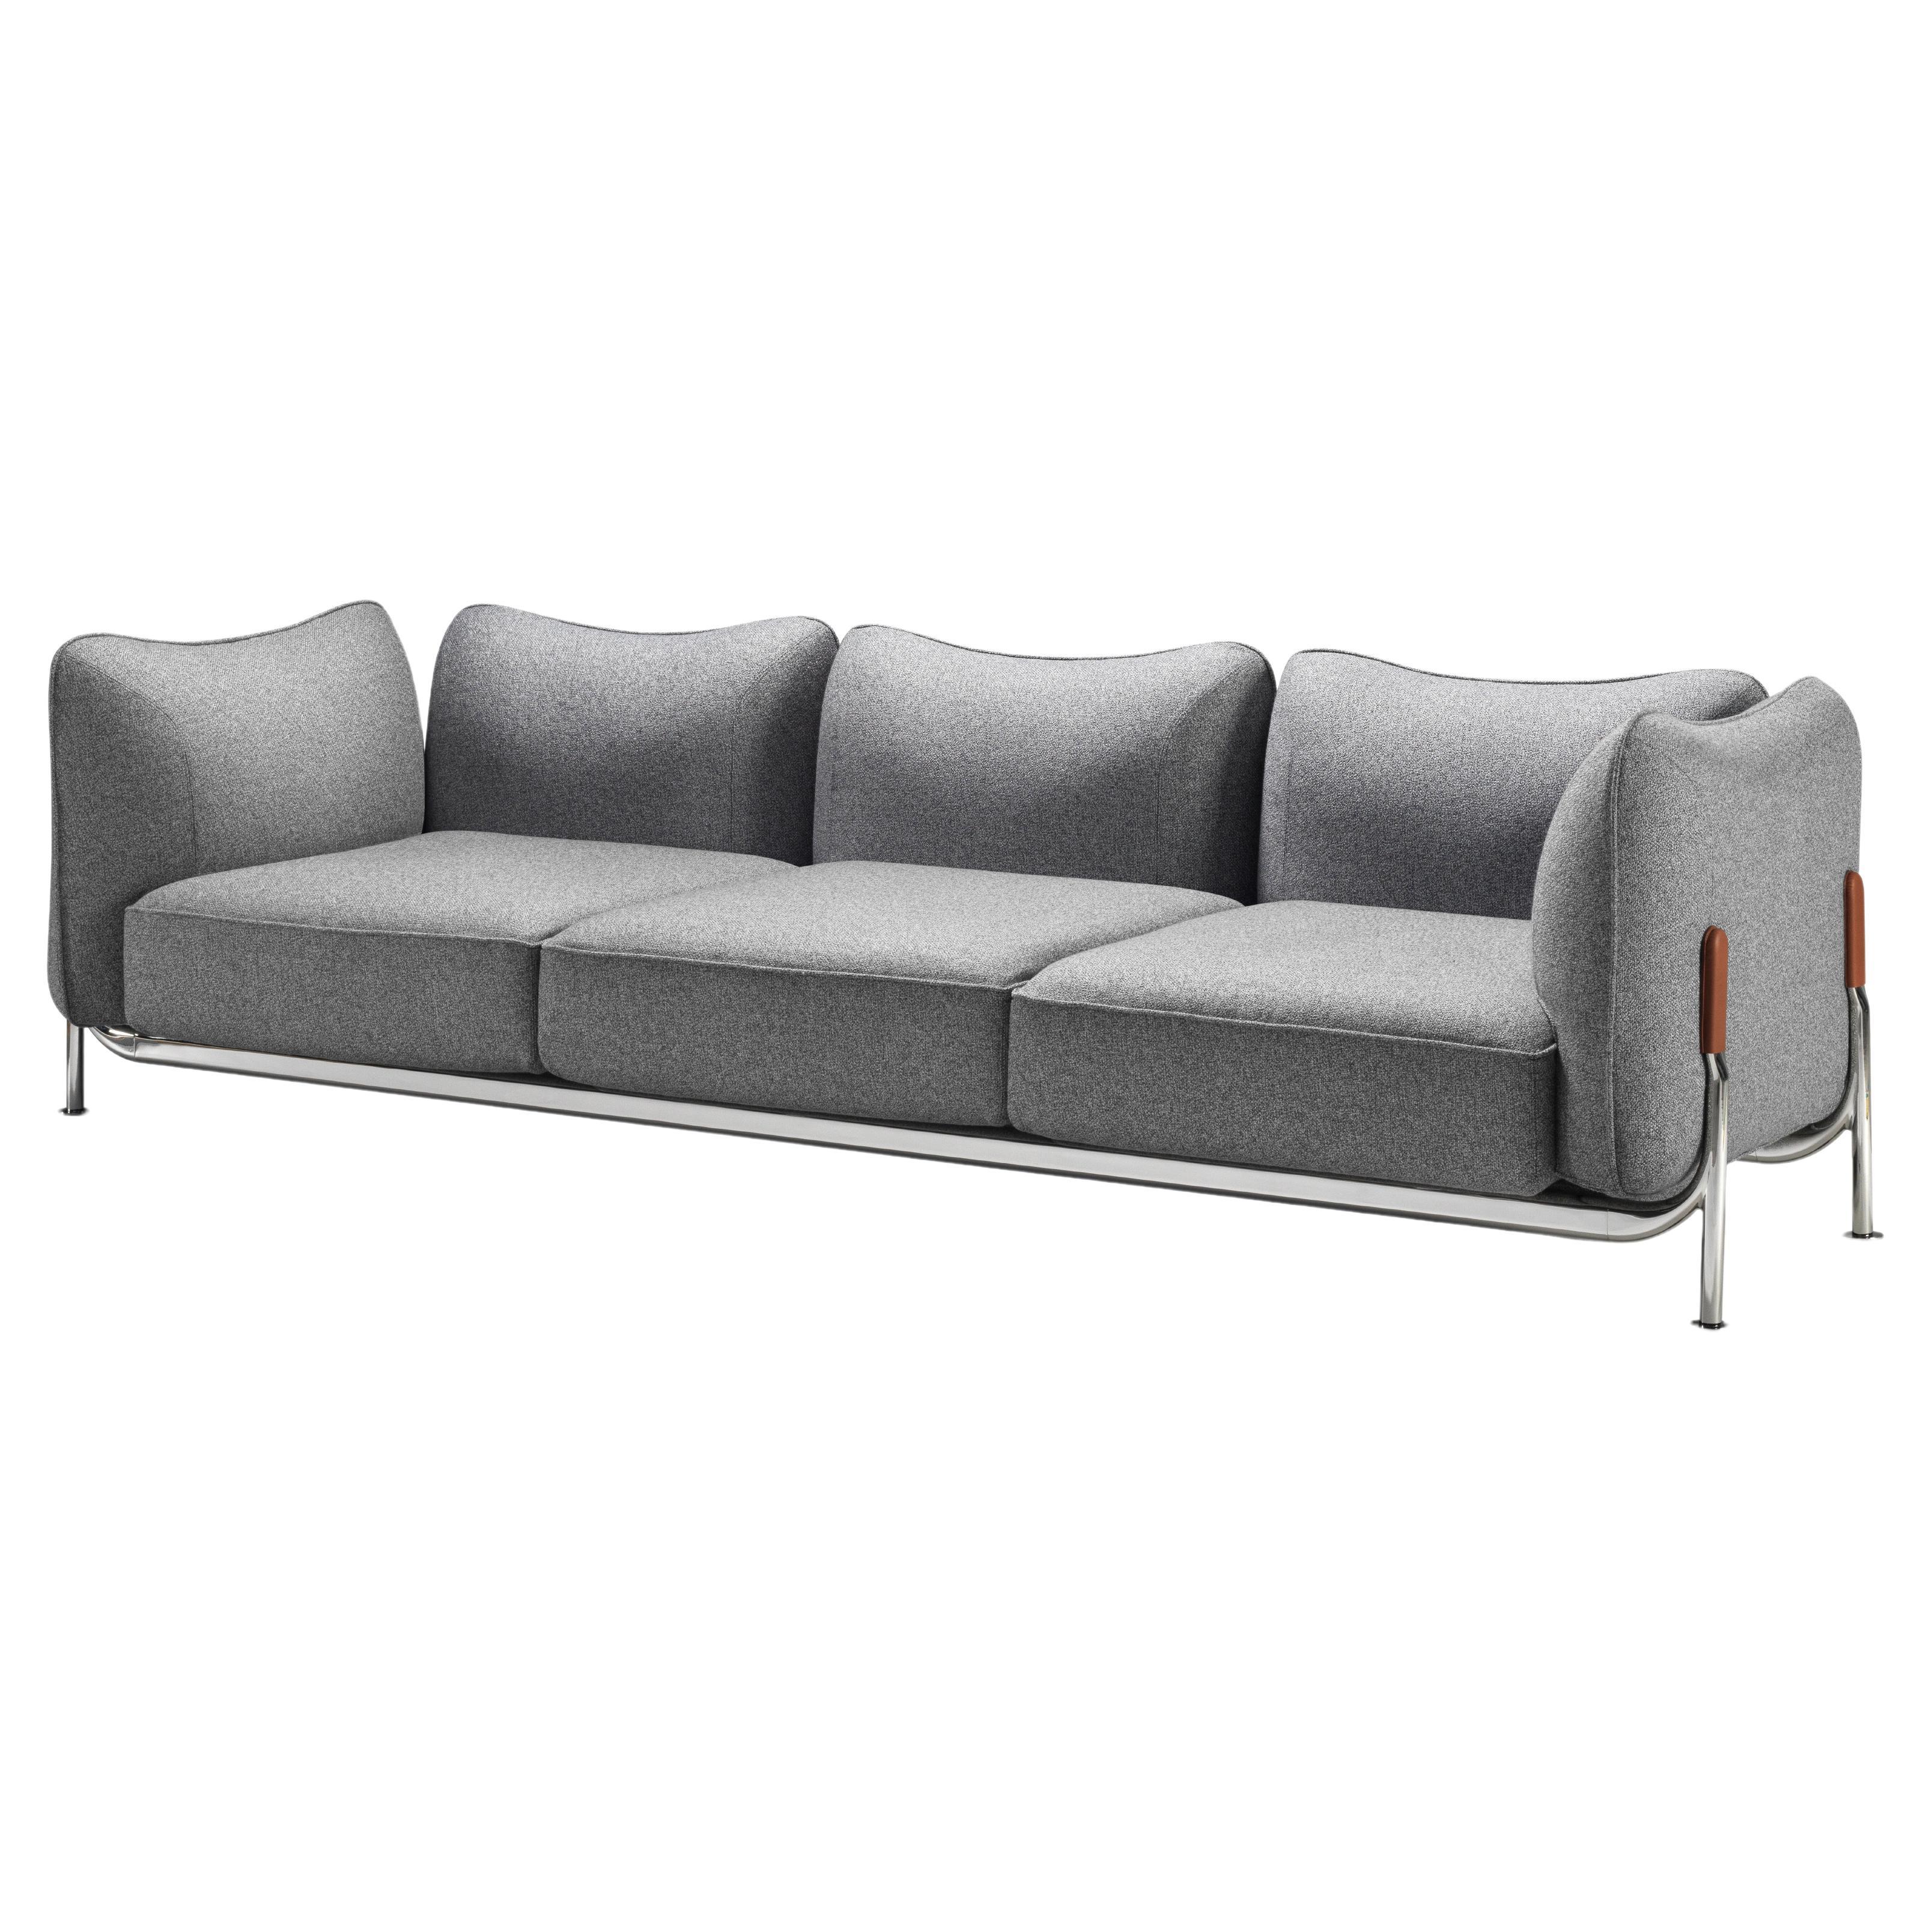 Tasca Sofa For Sale